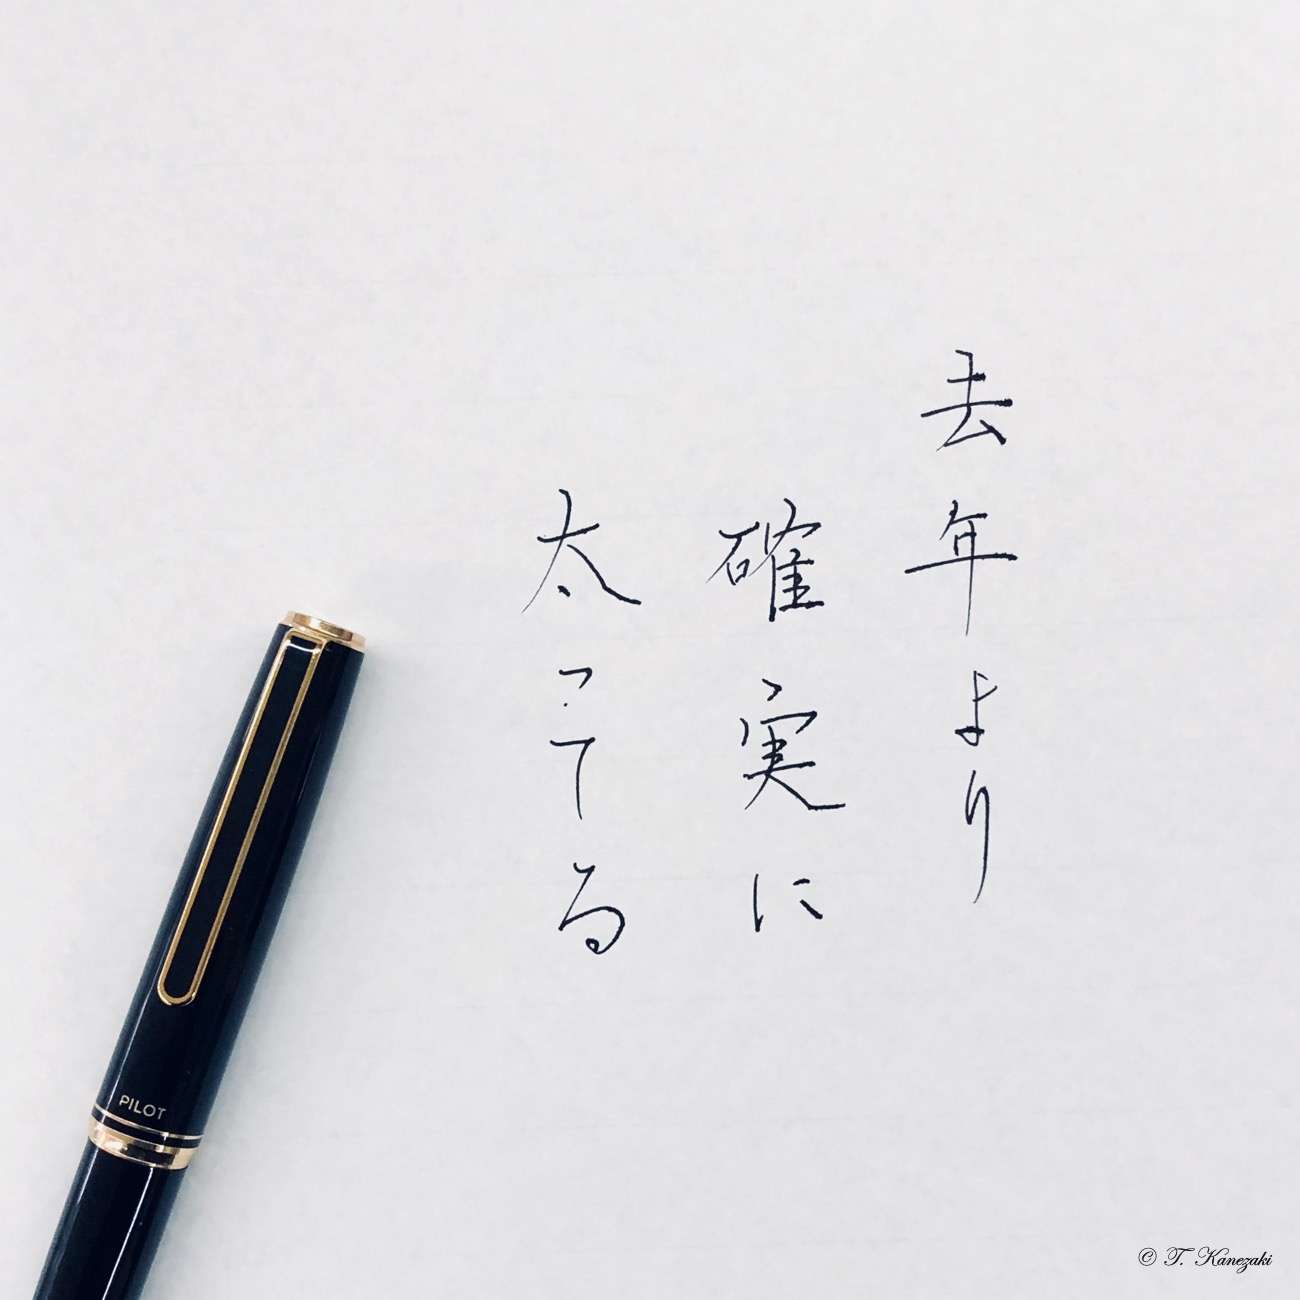 http://kanezaki.net/blog/handwriting001.jpg